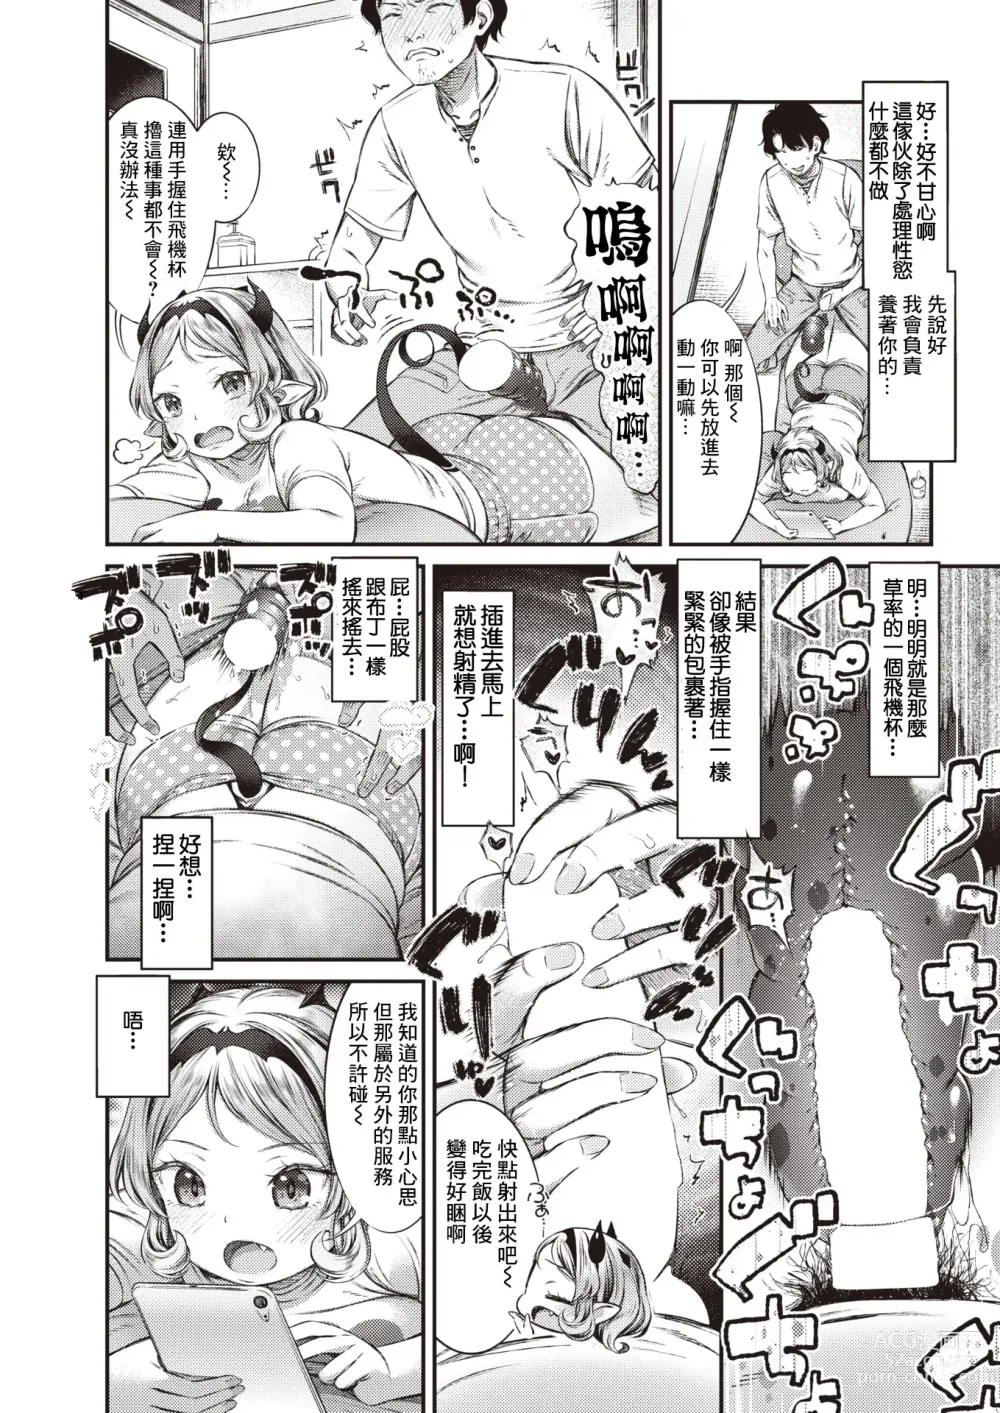 Page 4 of manga Change de